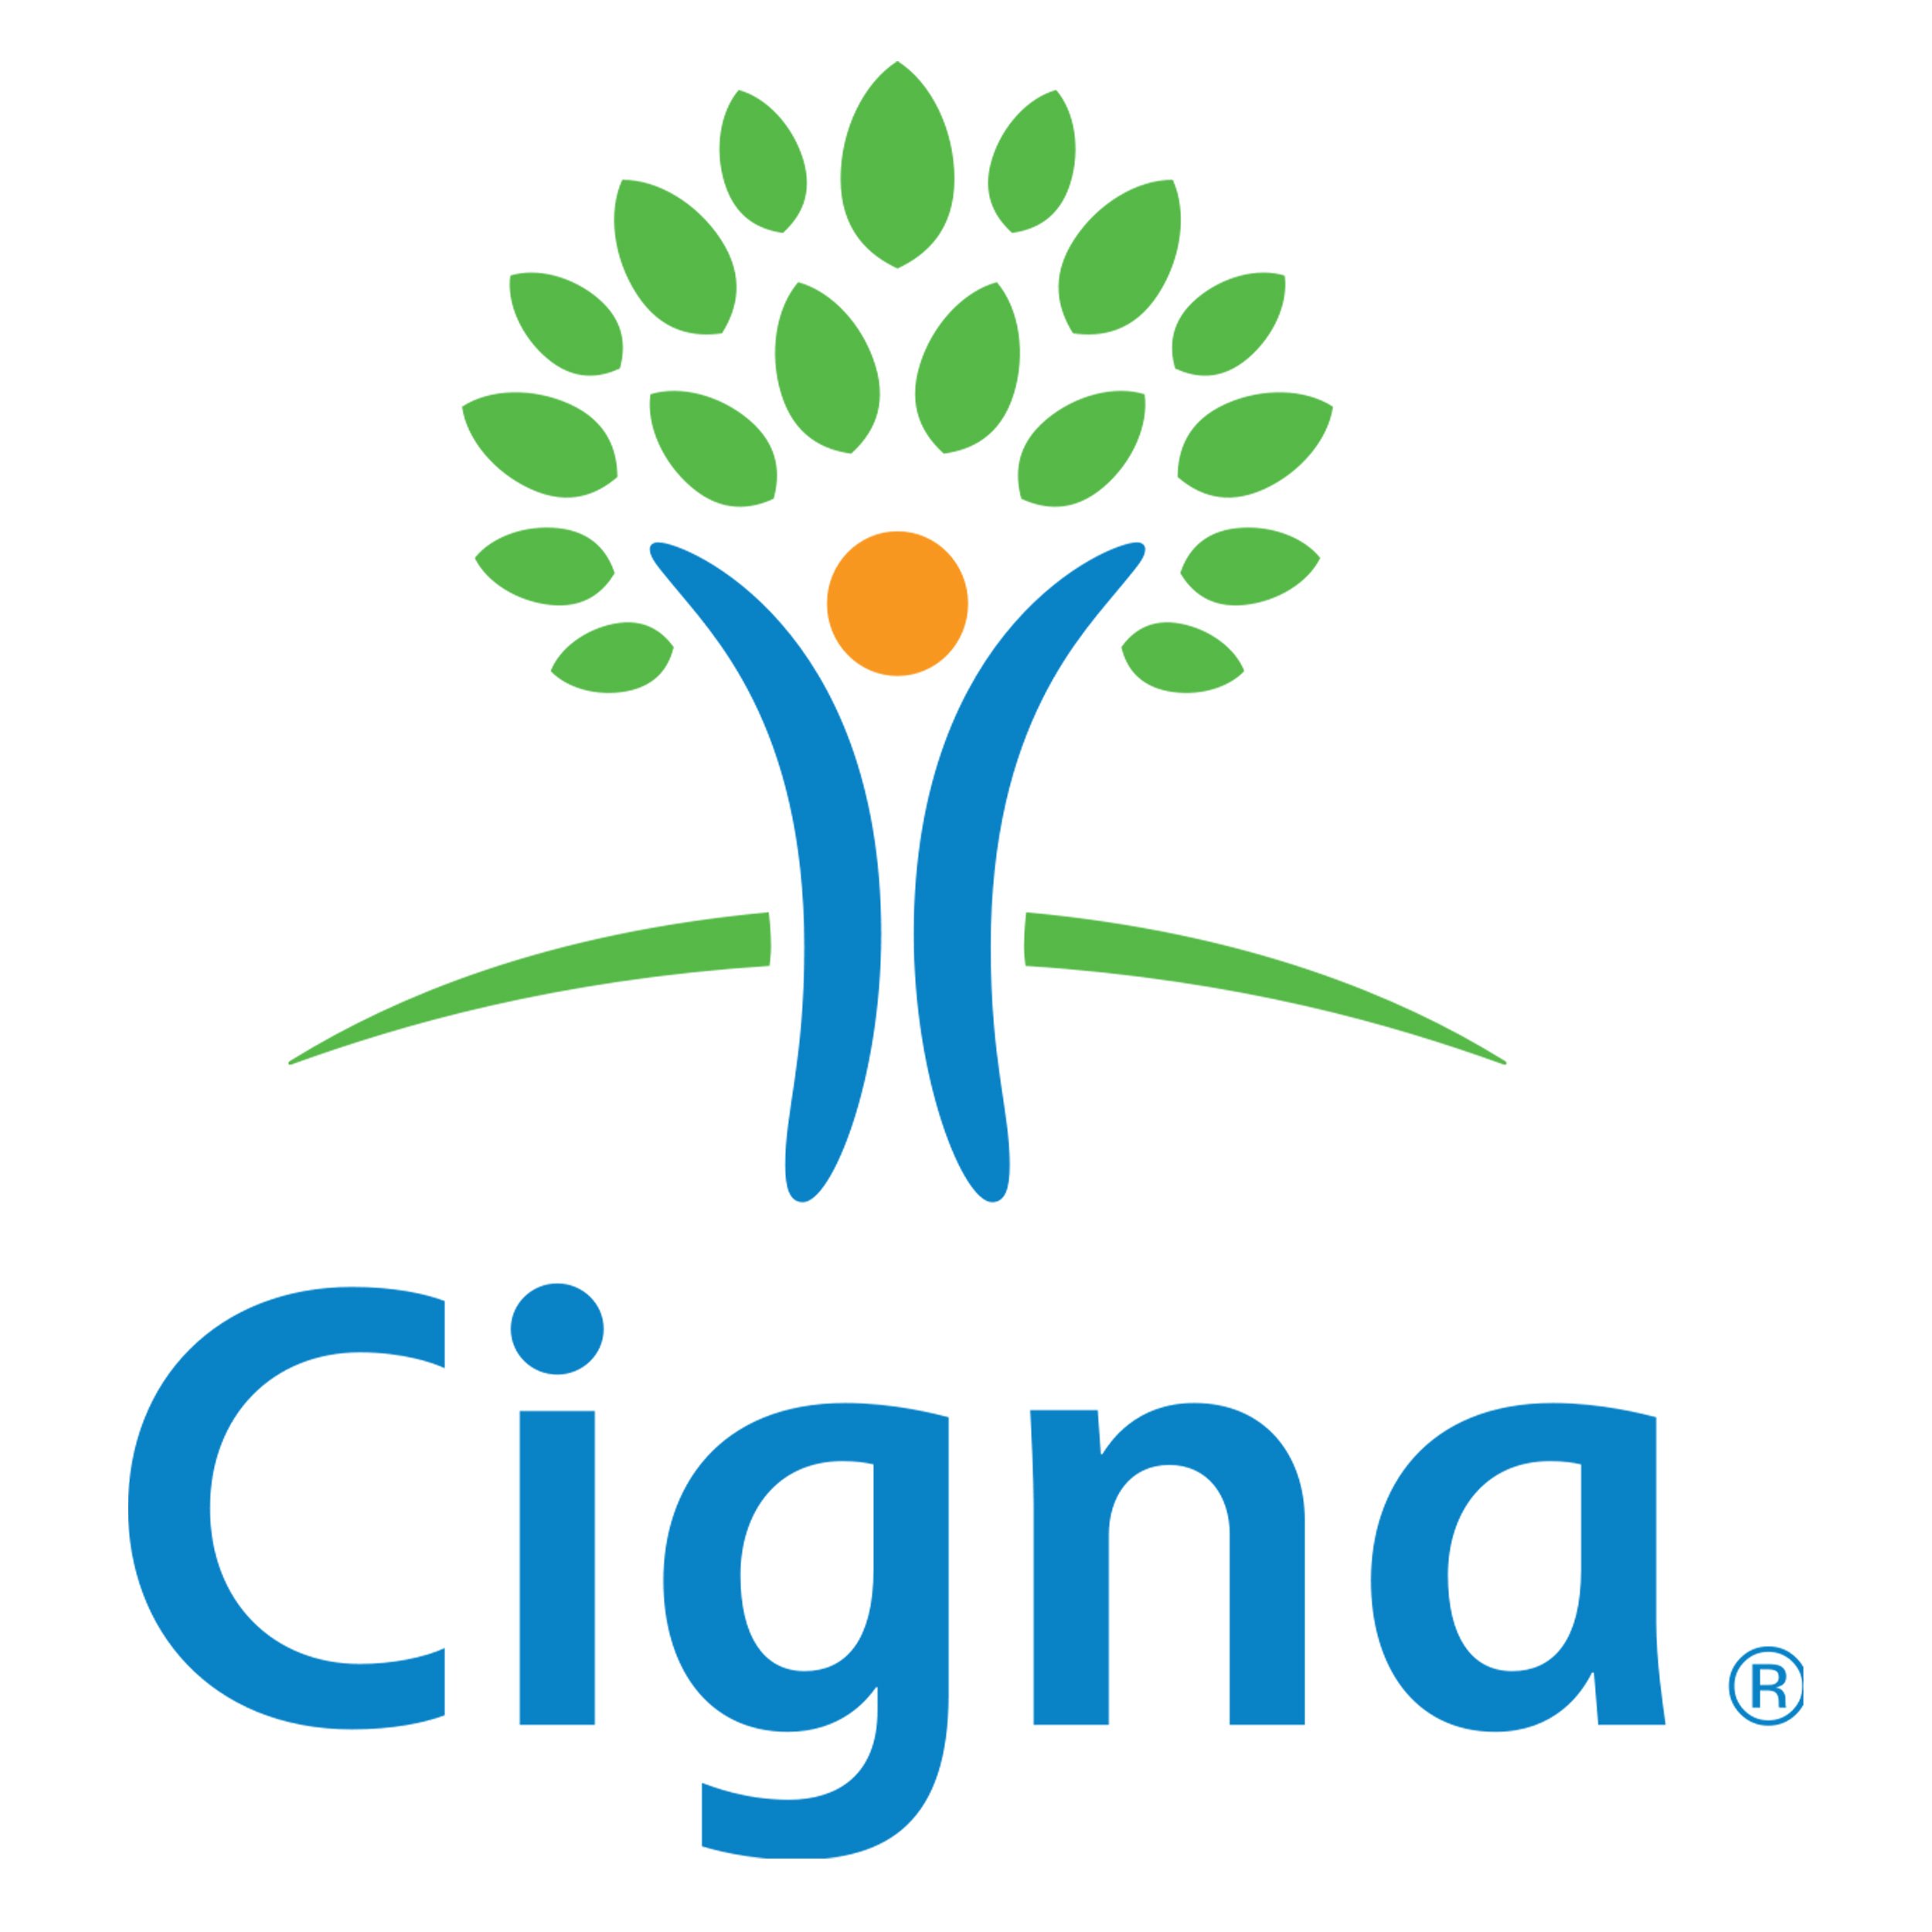 Cigna Insurance